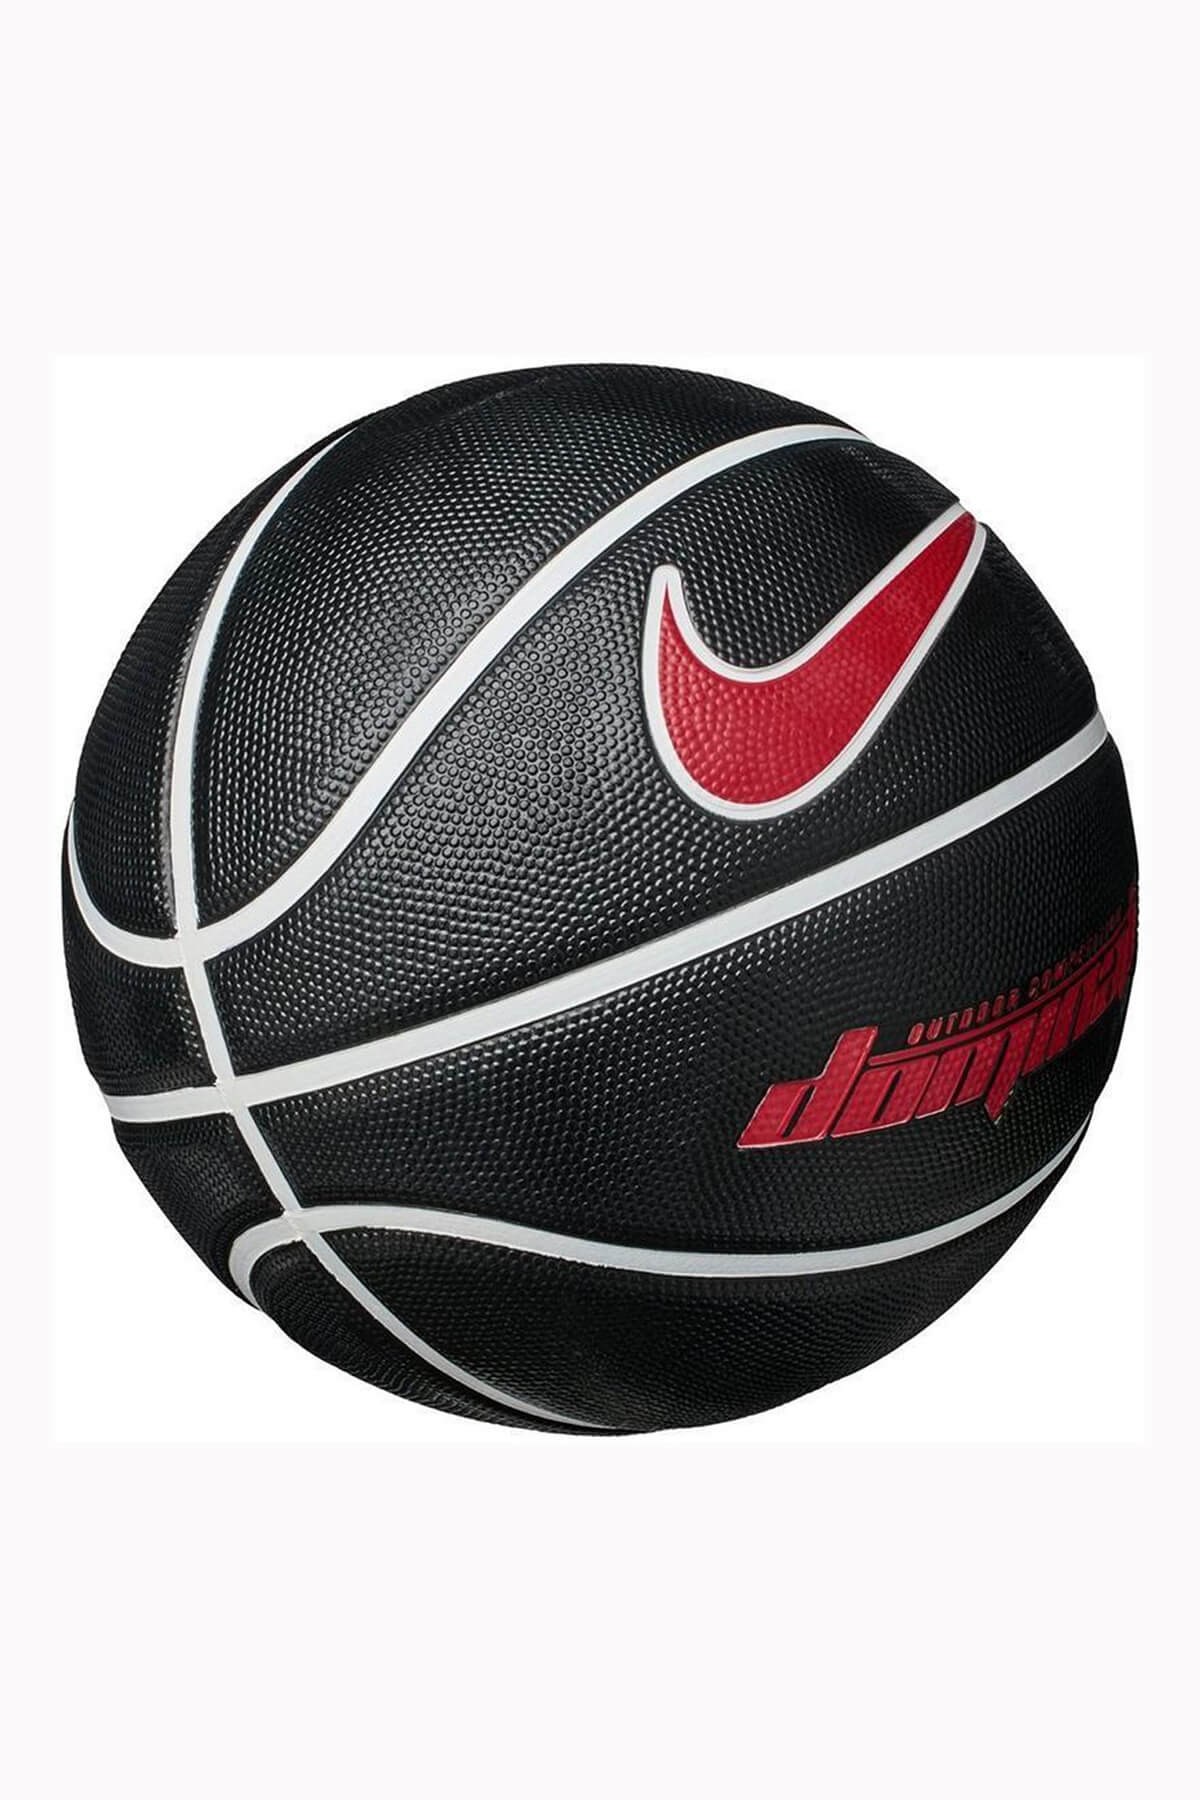 Basketbol Topları | Nike Dominate Siyah Kırmızı Basketbol Topu No:7